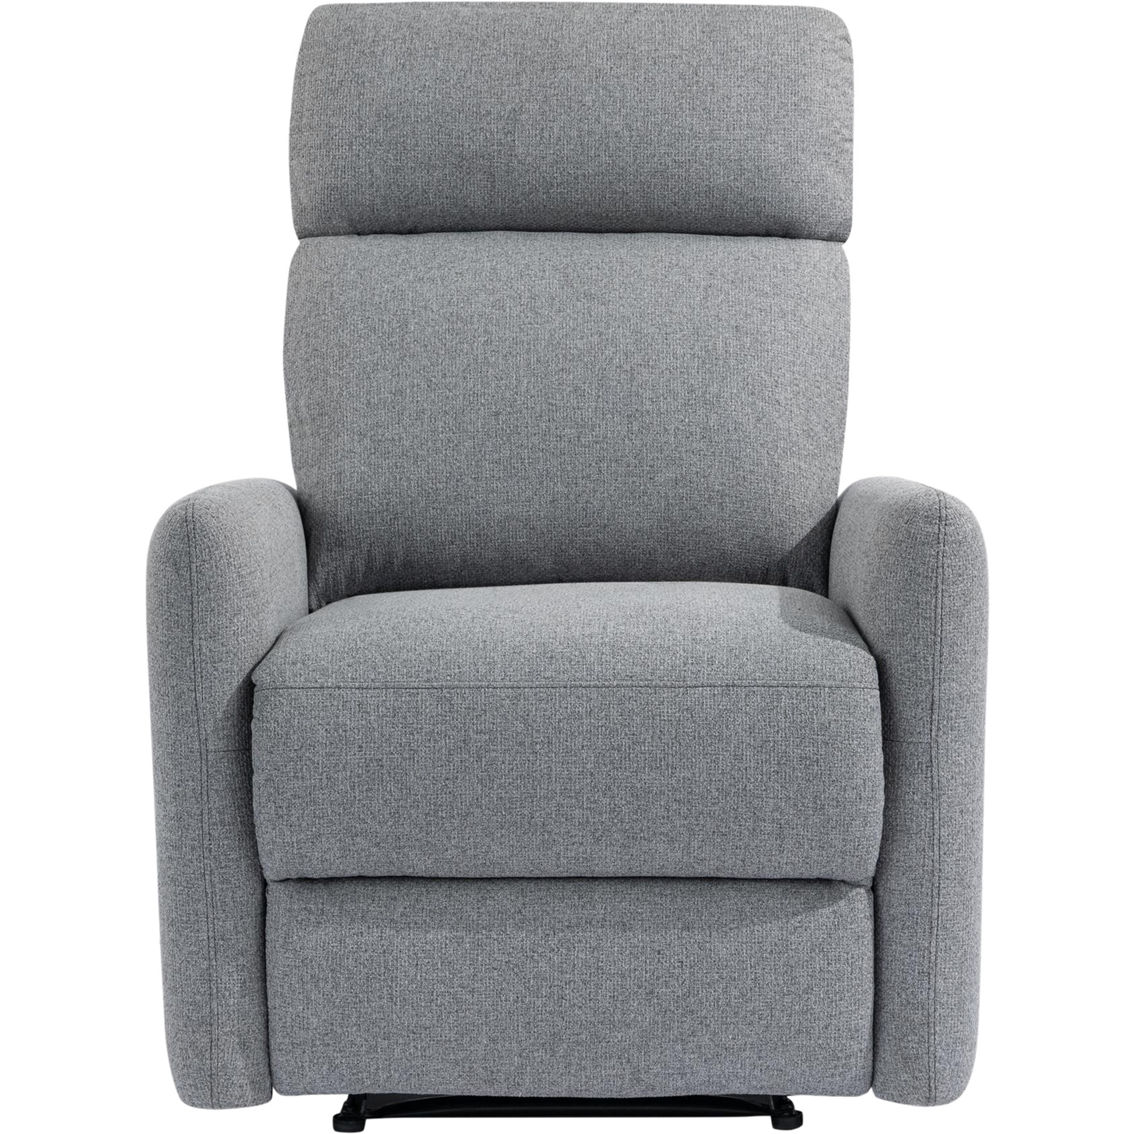 DHP Kai Power Recliner Chair with 8 Zone Massage and Lumbar Heat, Dark Gray Linen - Image 2 of 8